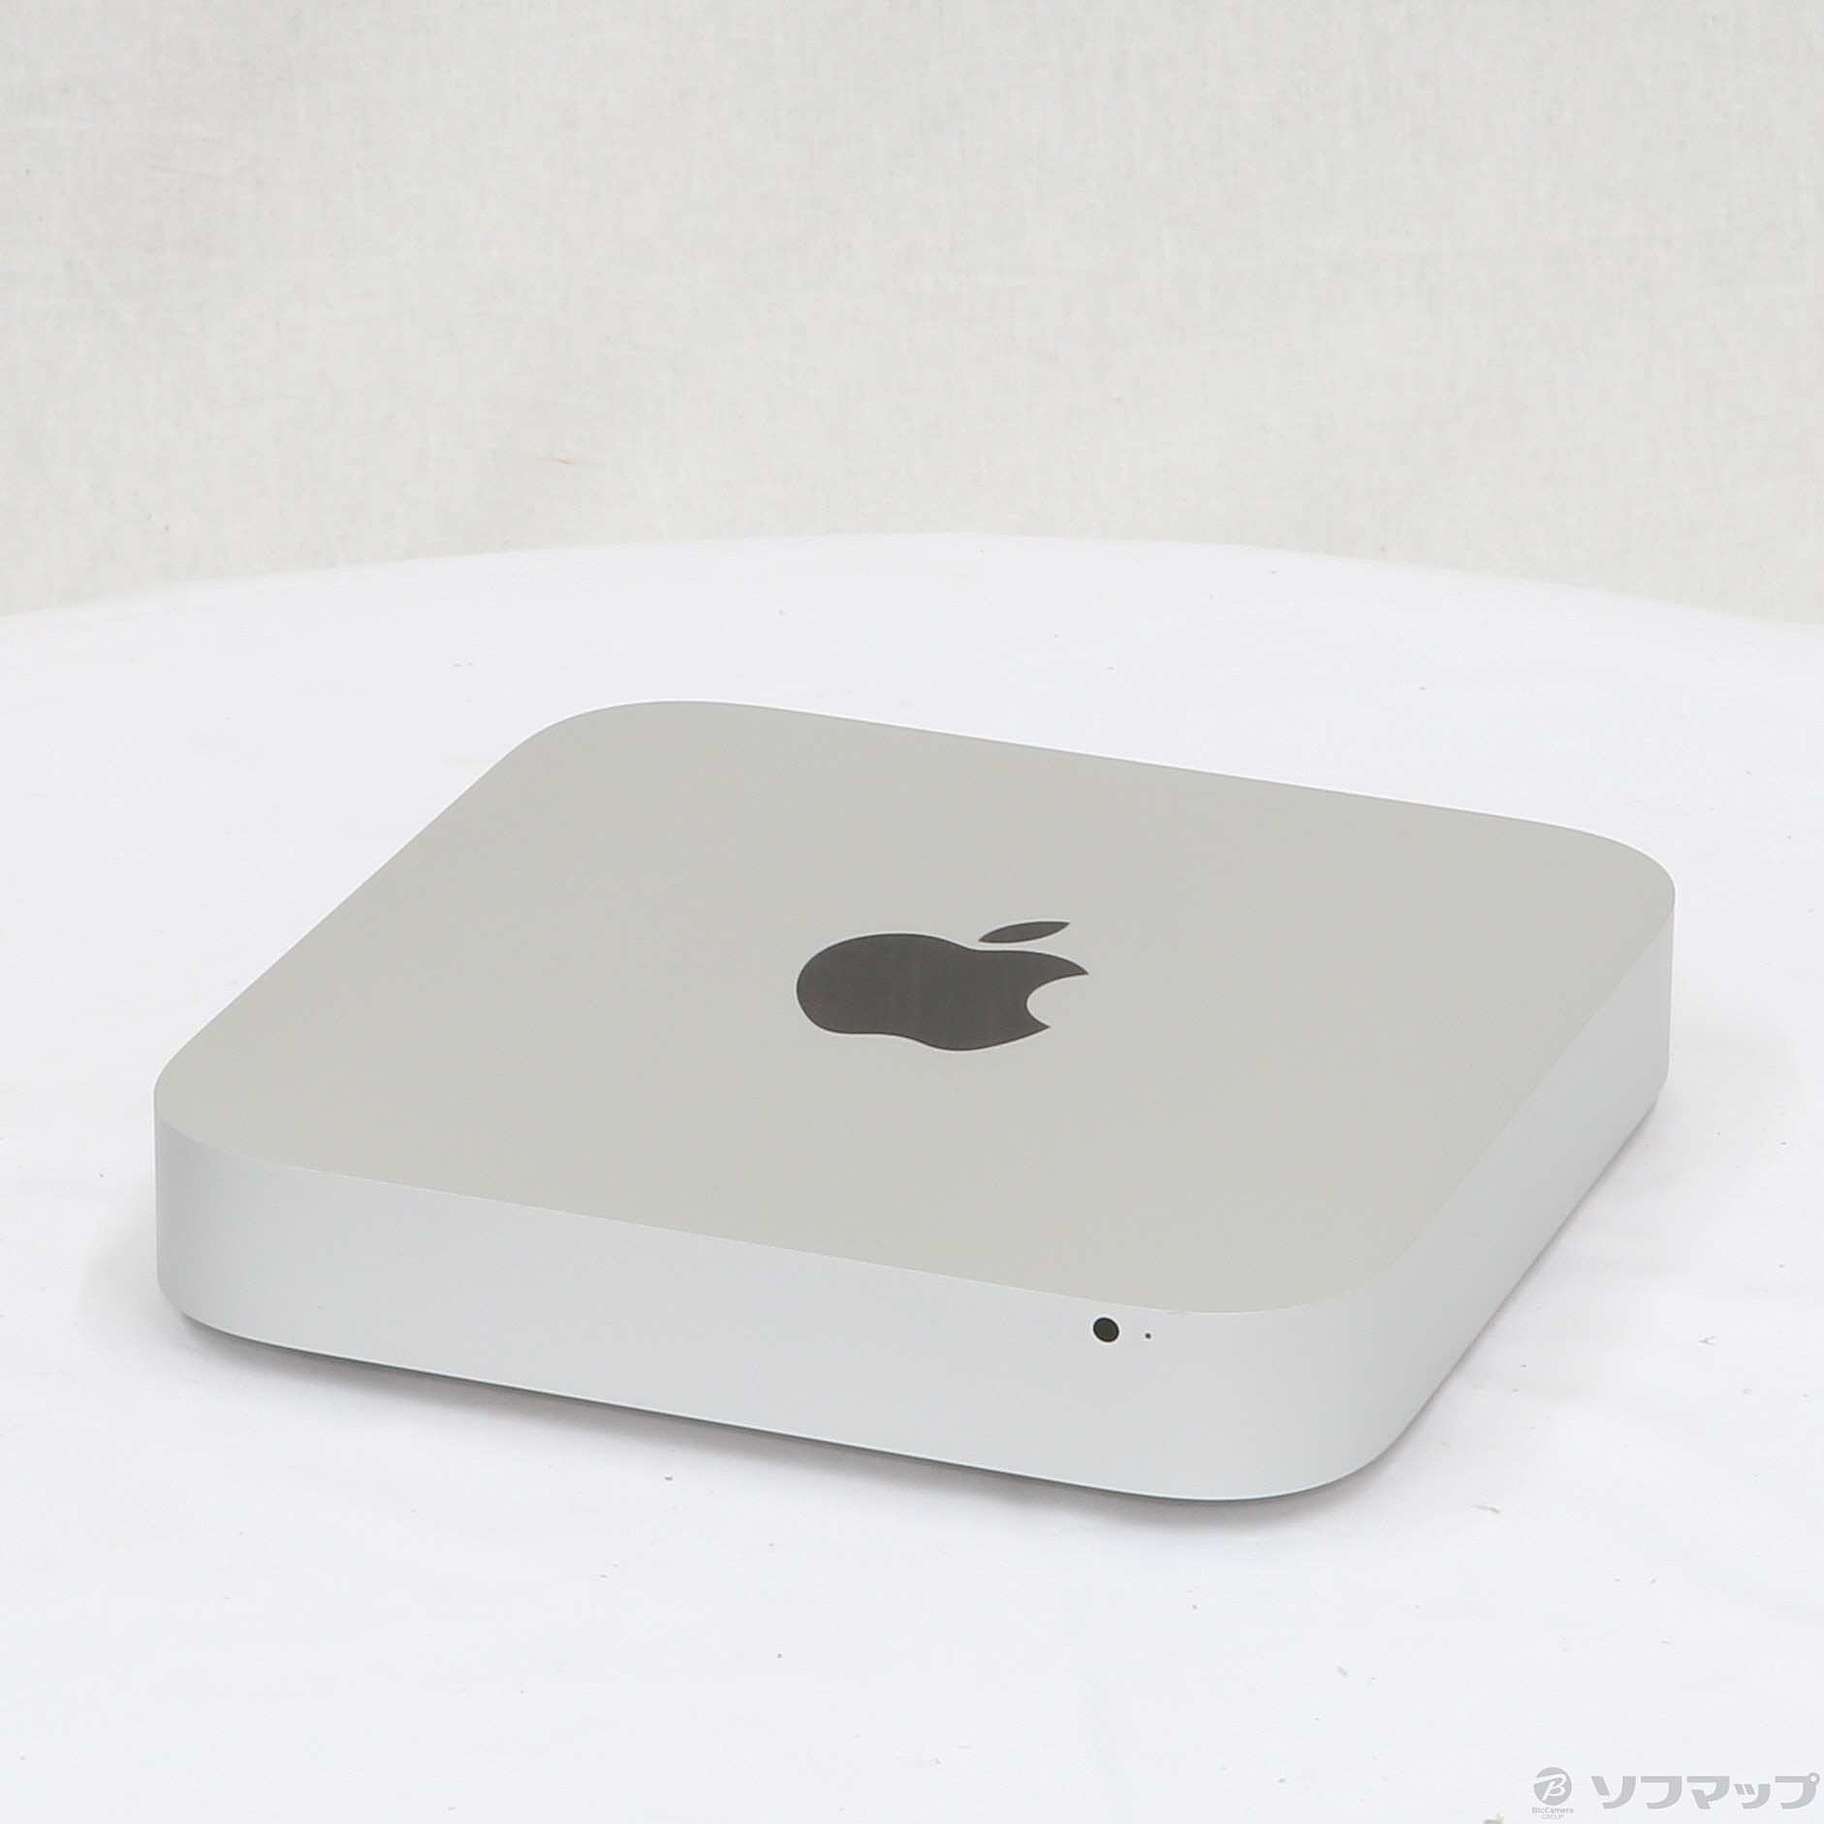 mac mini late 2012 for sale 2.3 ghz